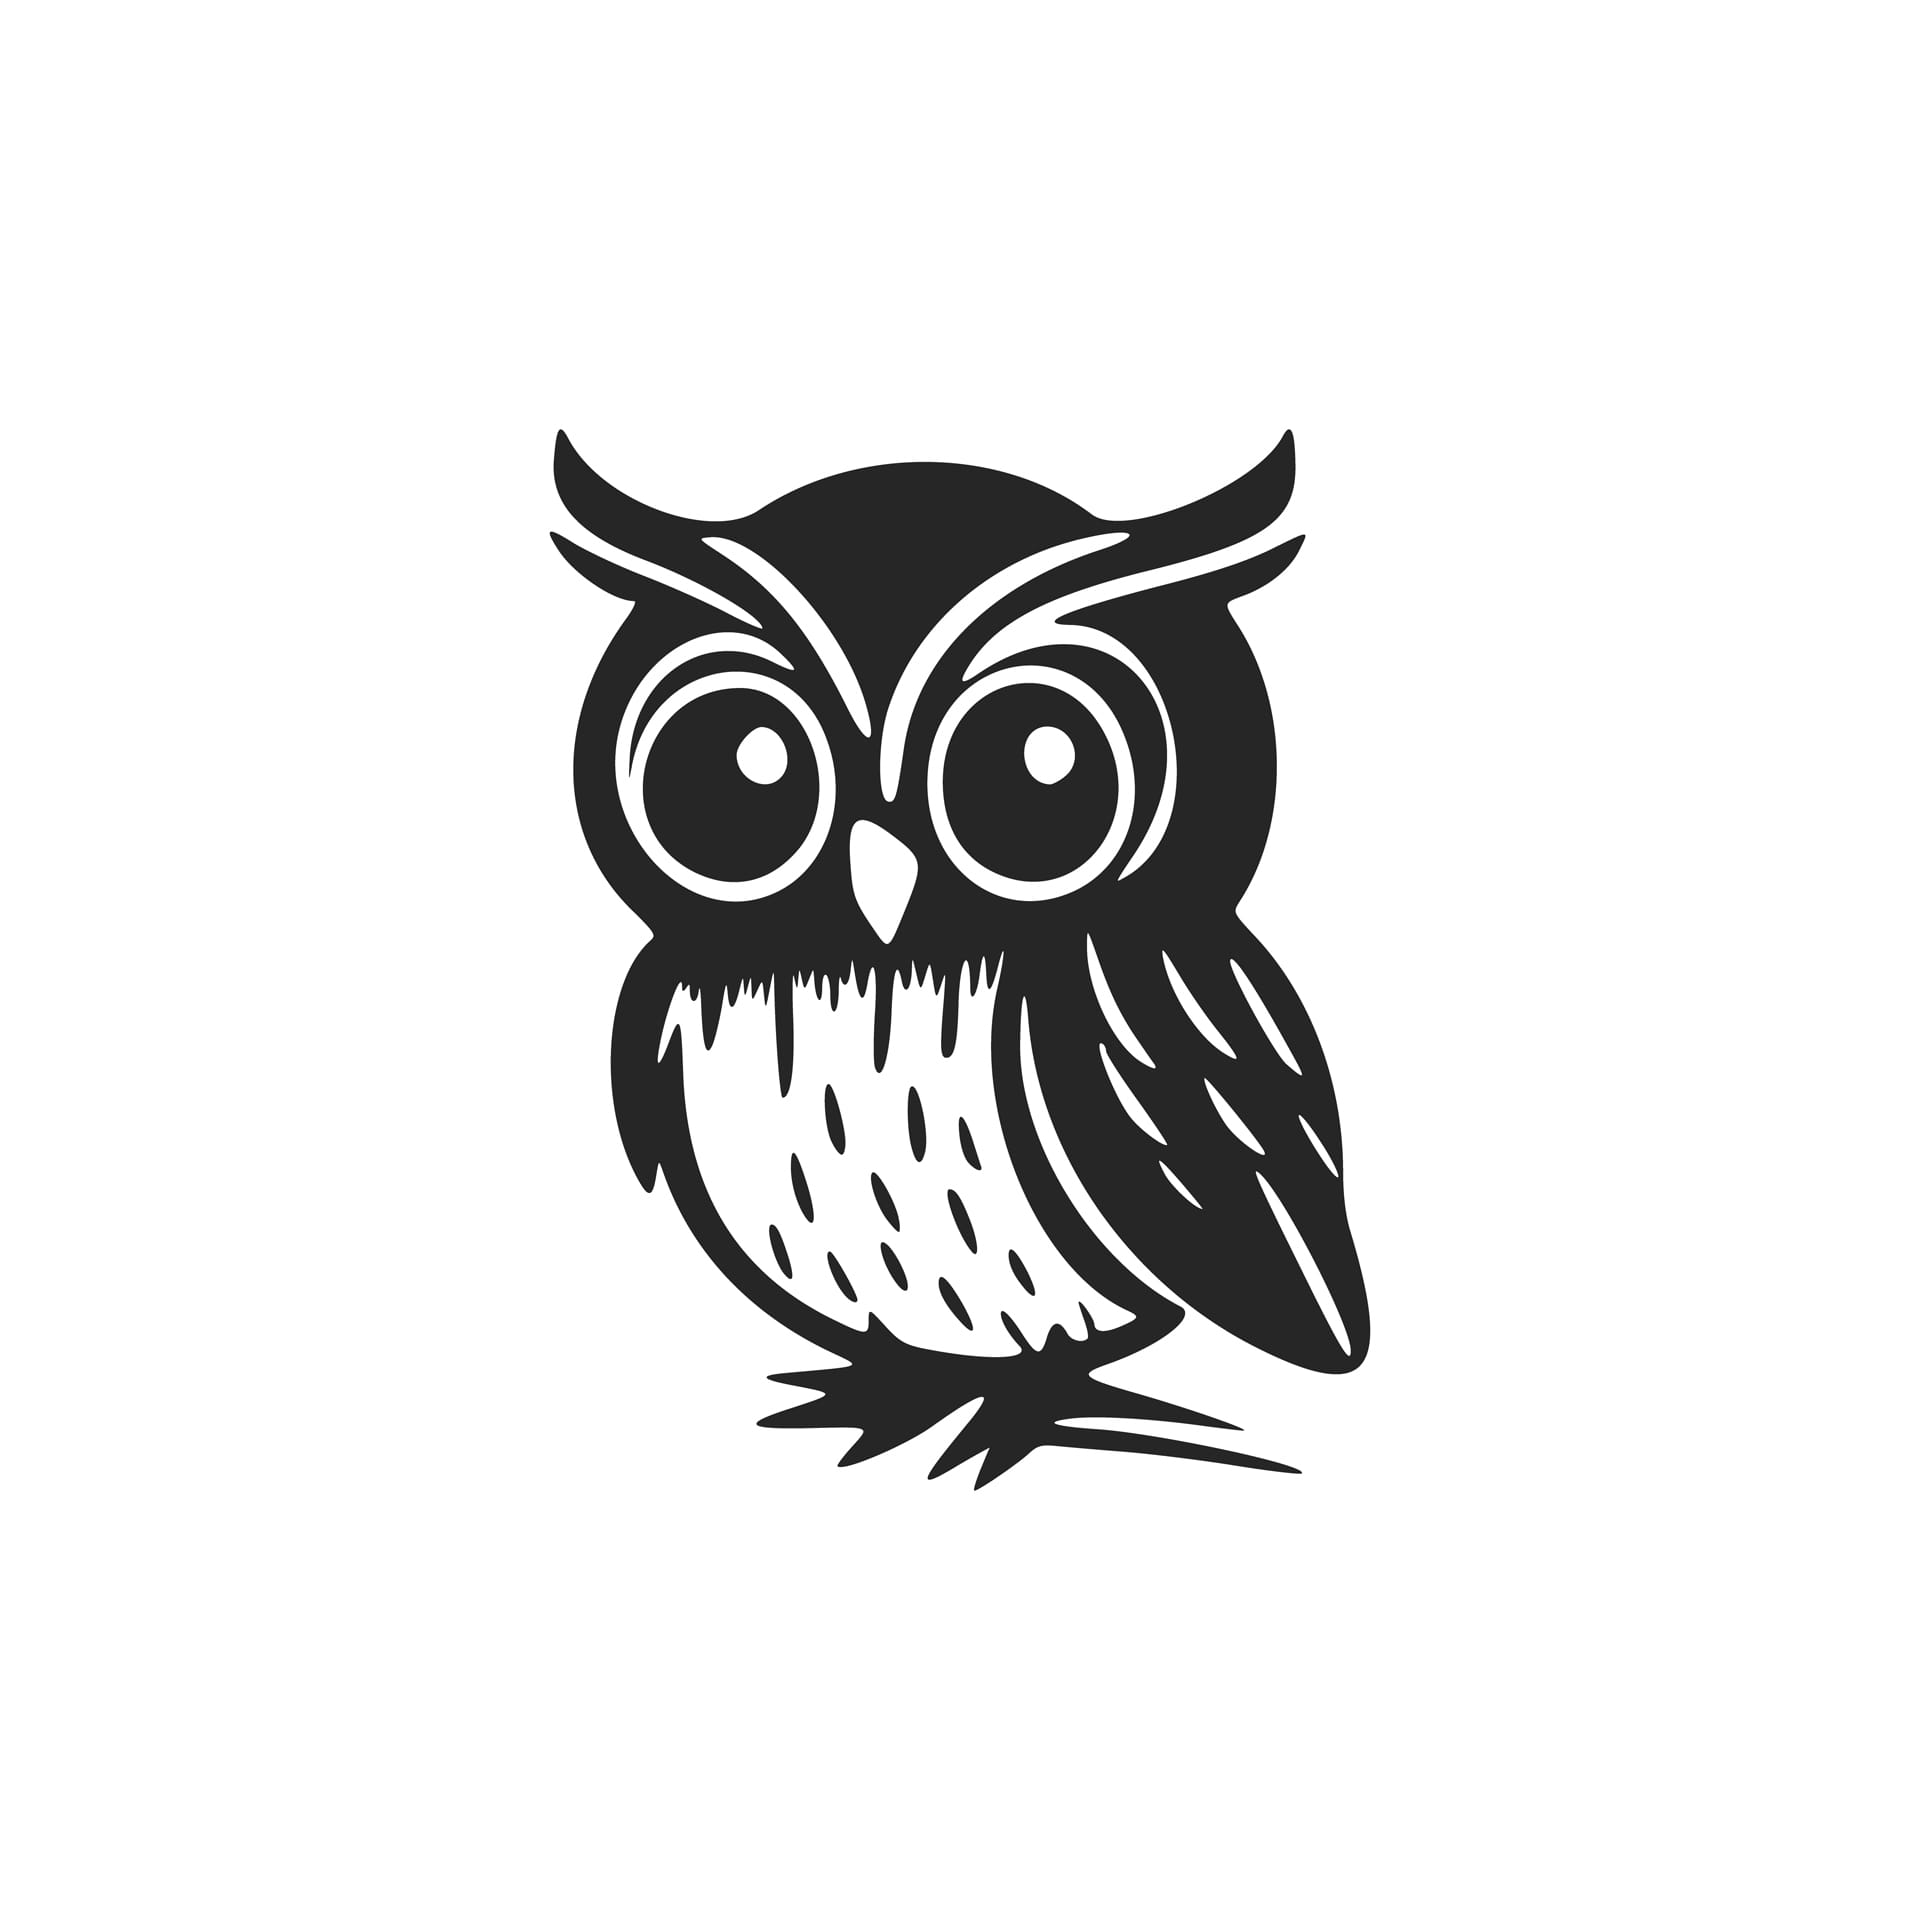 Cute black white owl logo excellent image